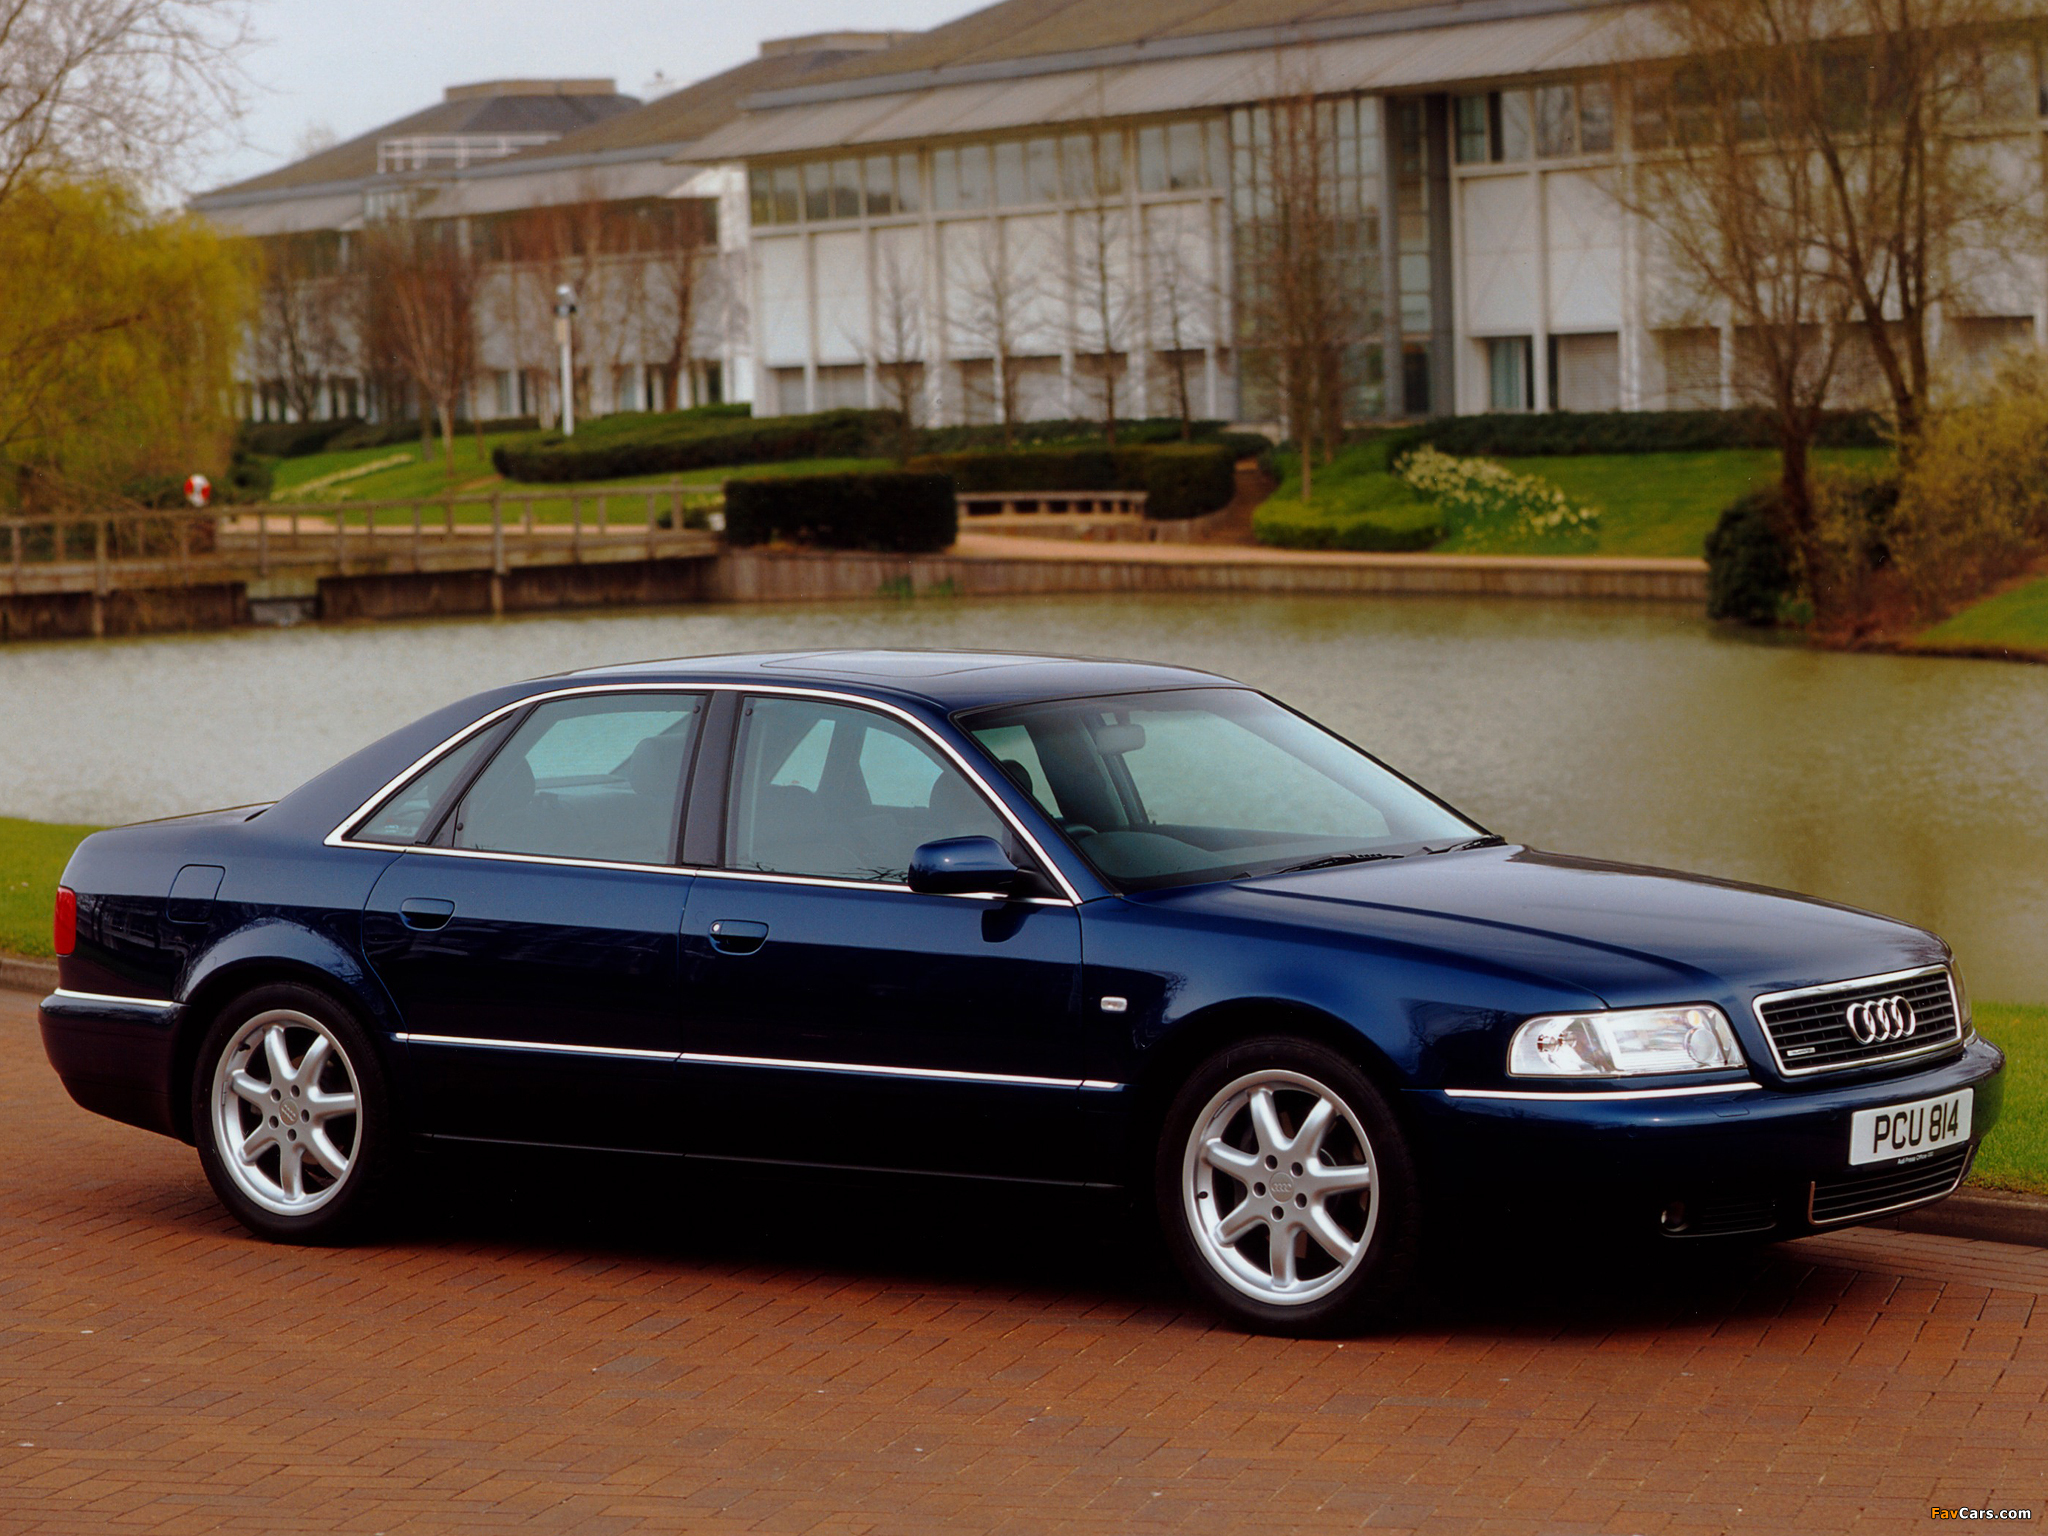 Купить ауди а 8 1. Audi a8 d2 2000. Audi a8 d2 2001. Audi a8 d2 (1994-2002). Audi a8 d2 1999.